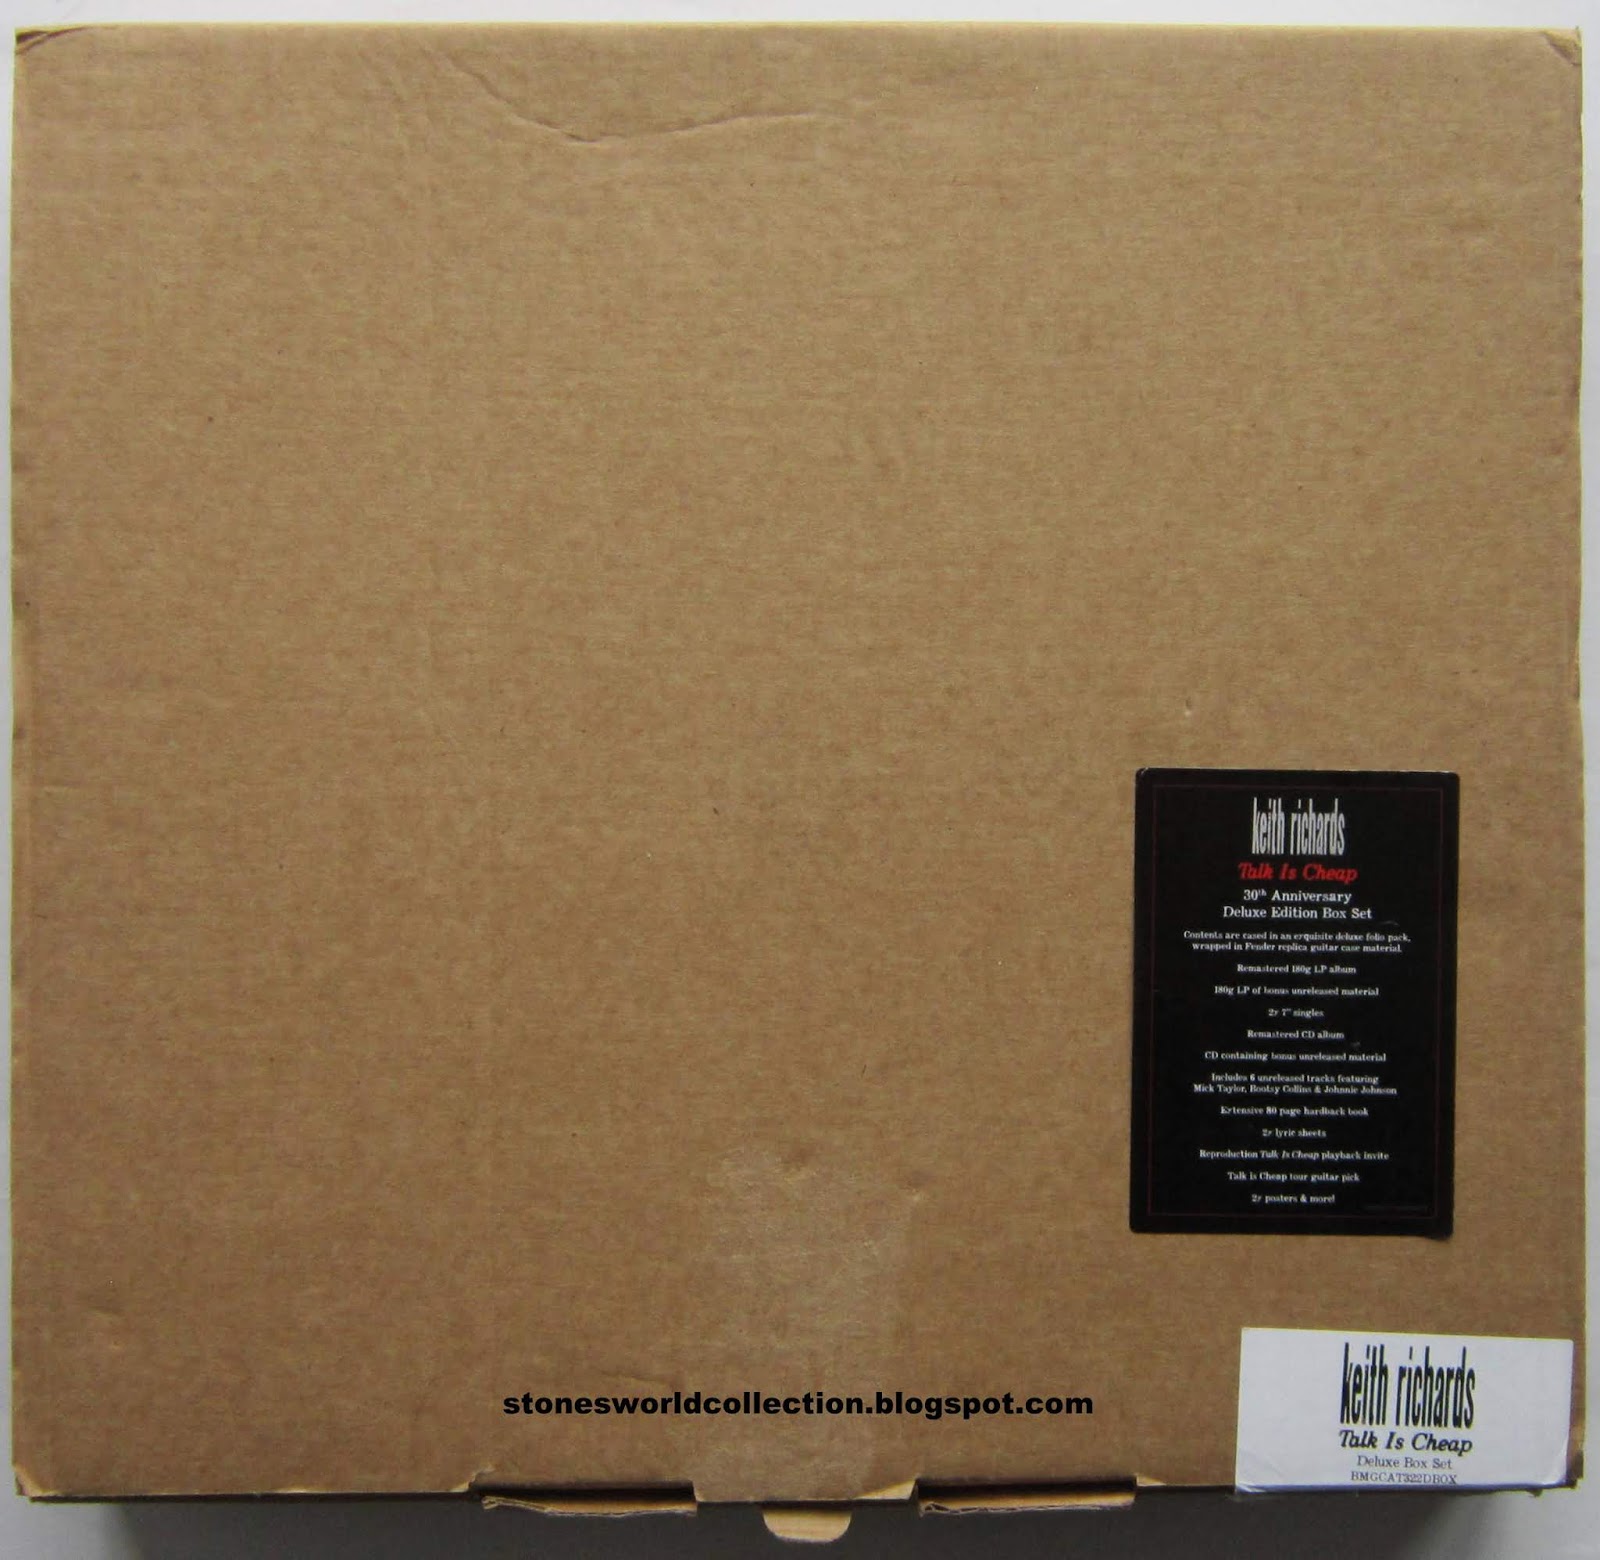 Limited Edition 7 Vinyl Bundle - Keith Richards